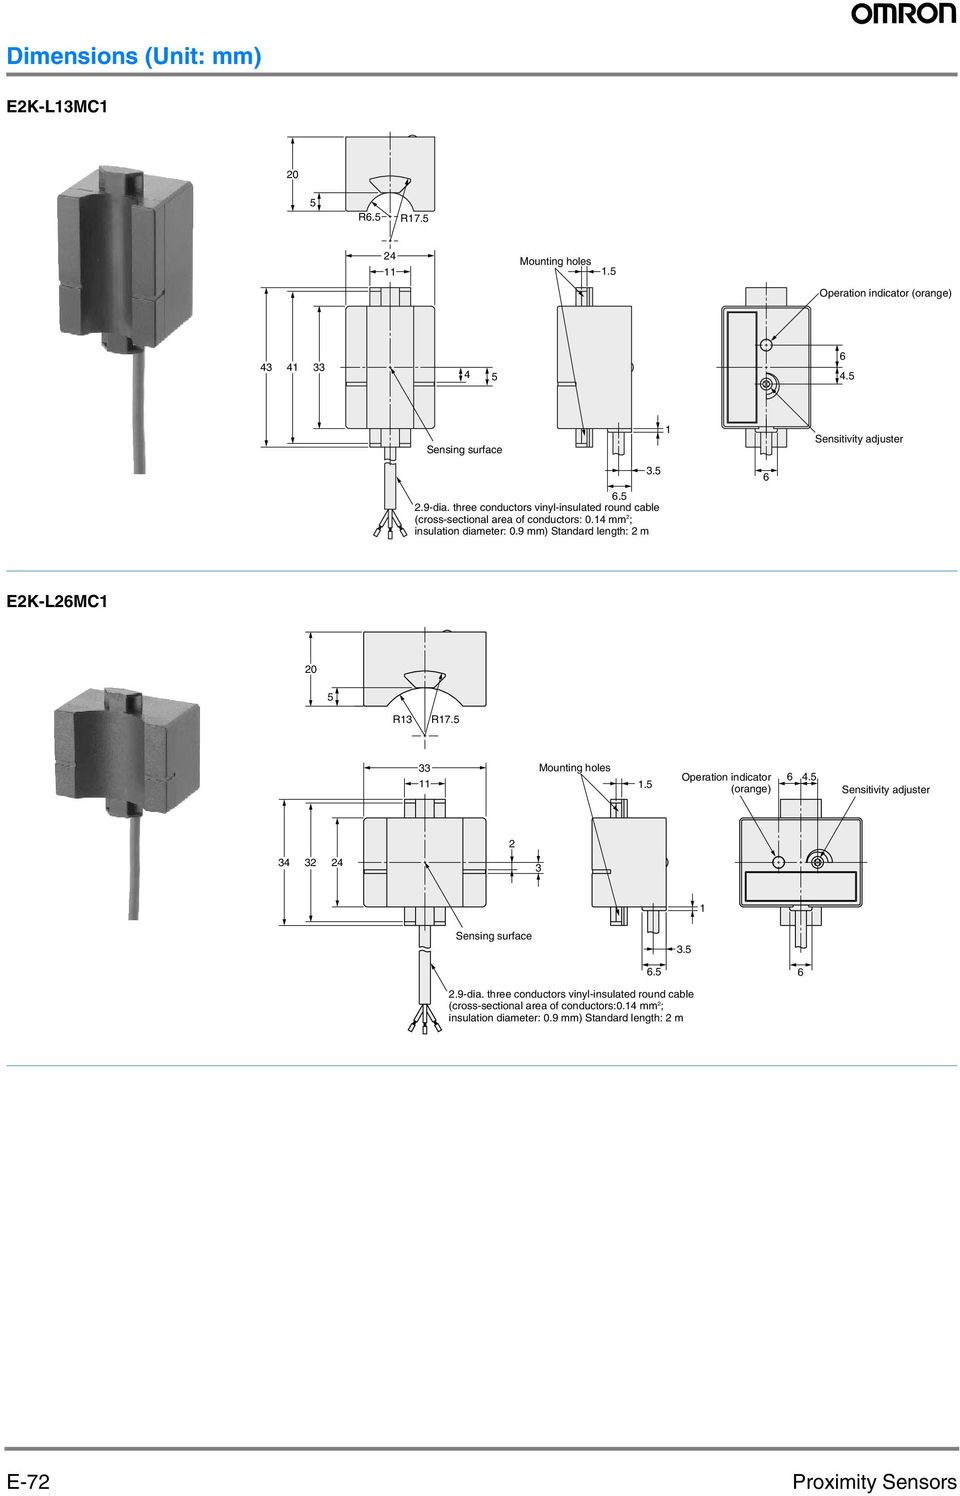 9 mm) Standard length: m Sensitivity adjuster MC 0 5 R3 R7.5 33 Mounting holes.5 Operation indicator (orange) 4.